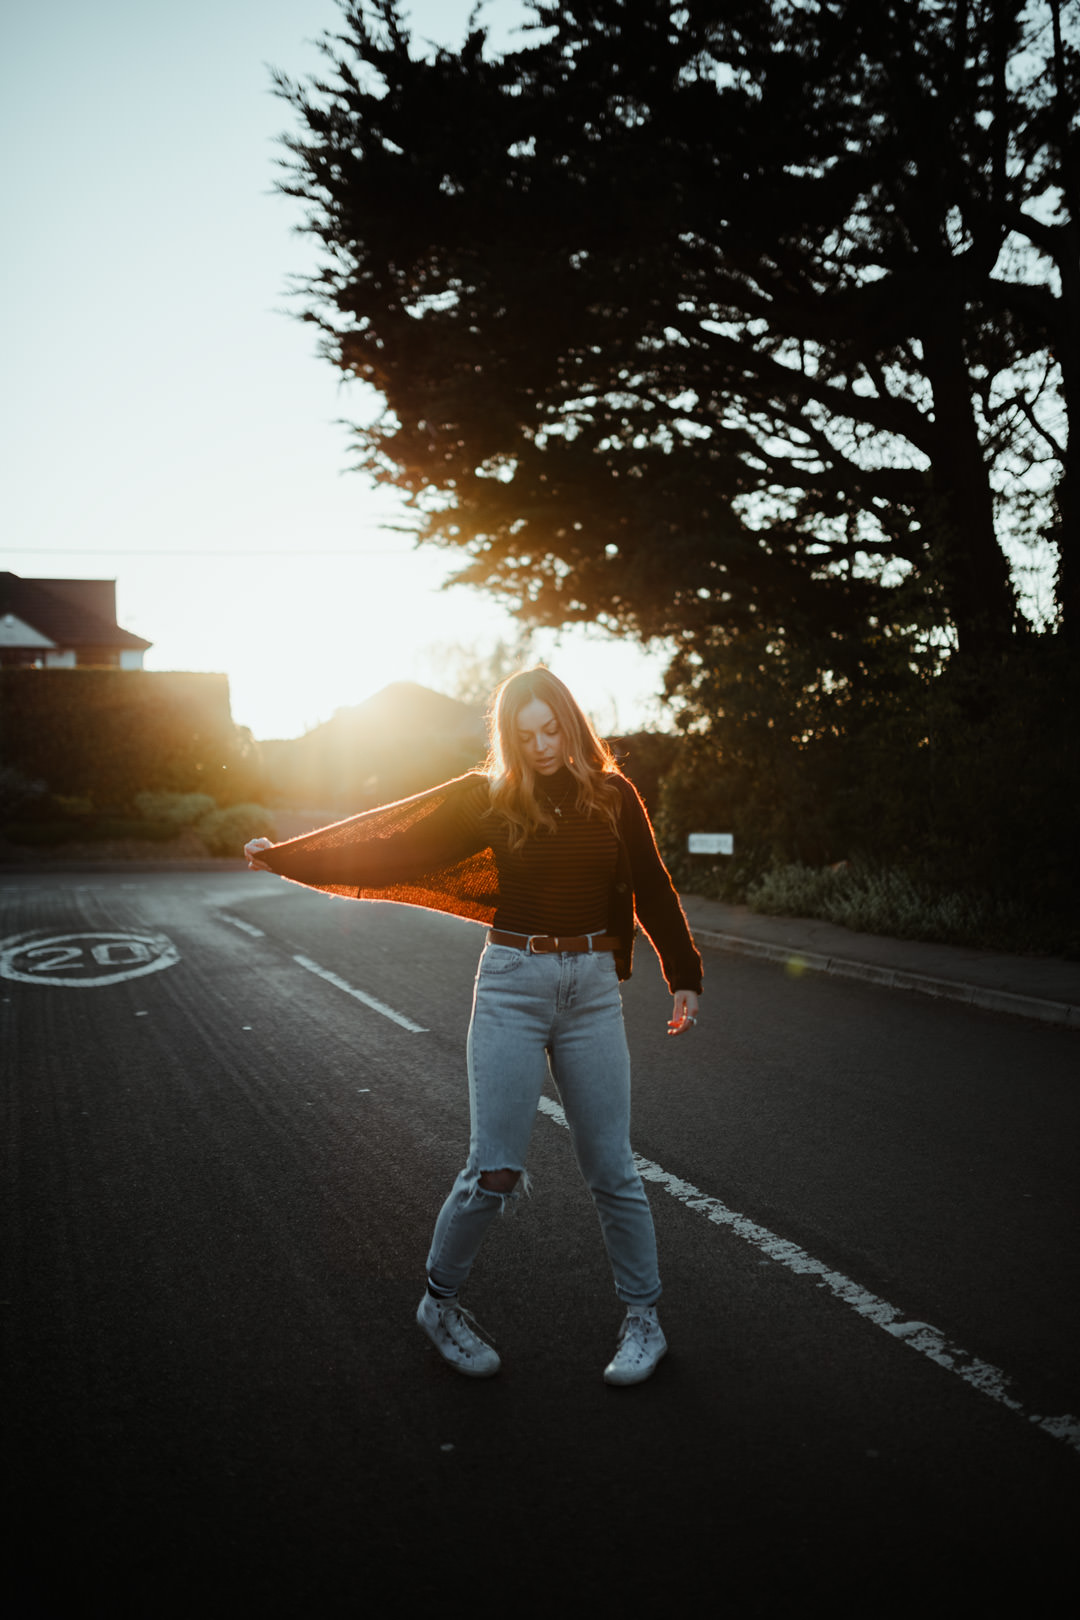 girl dancing in road during golden sunset